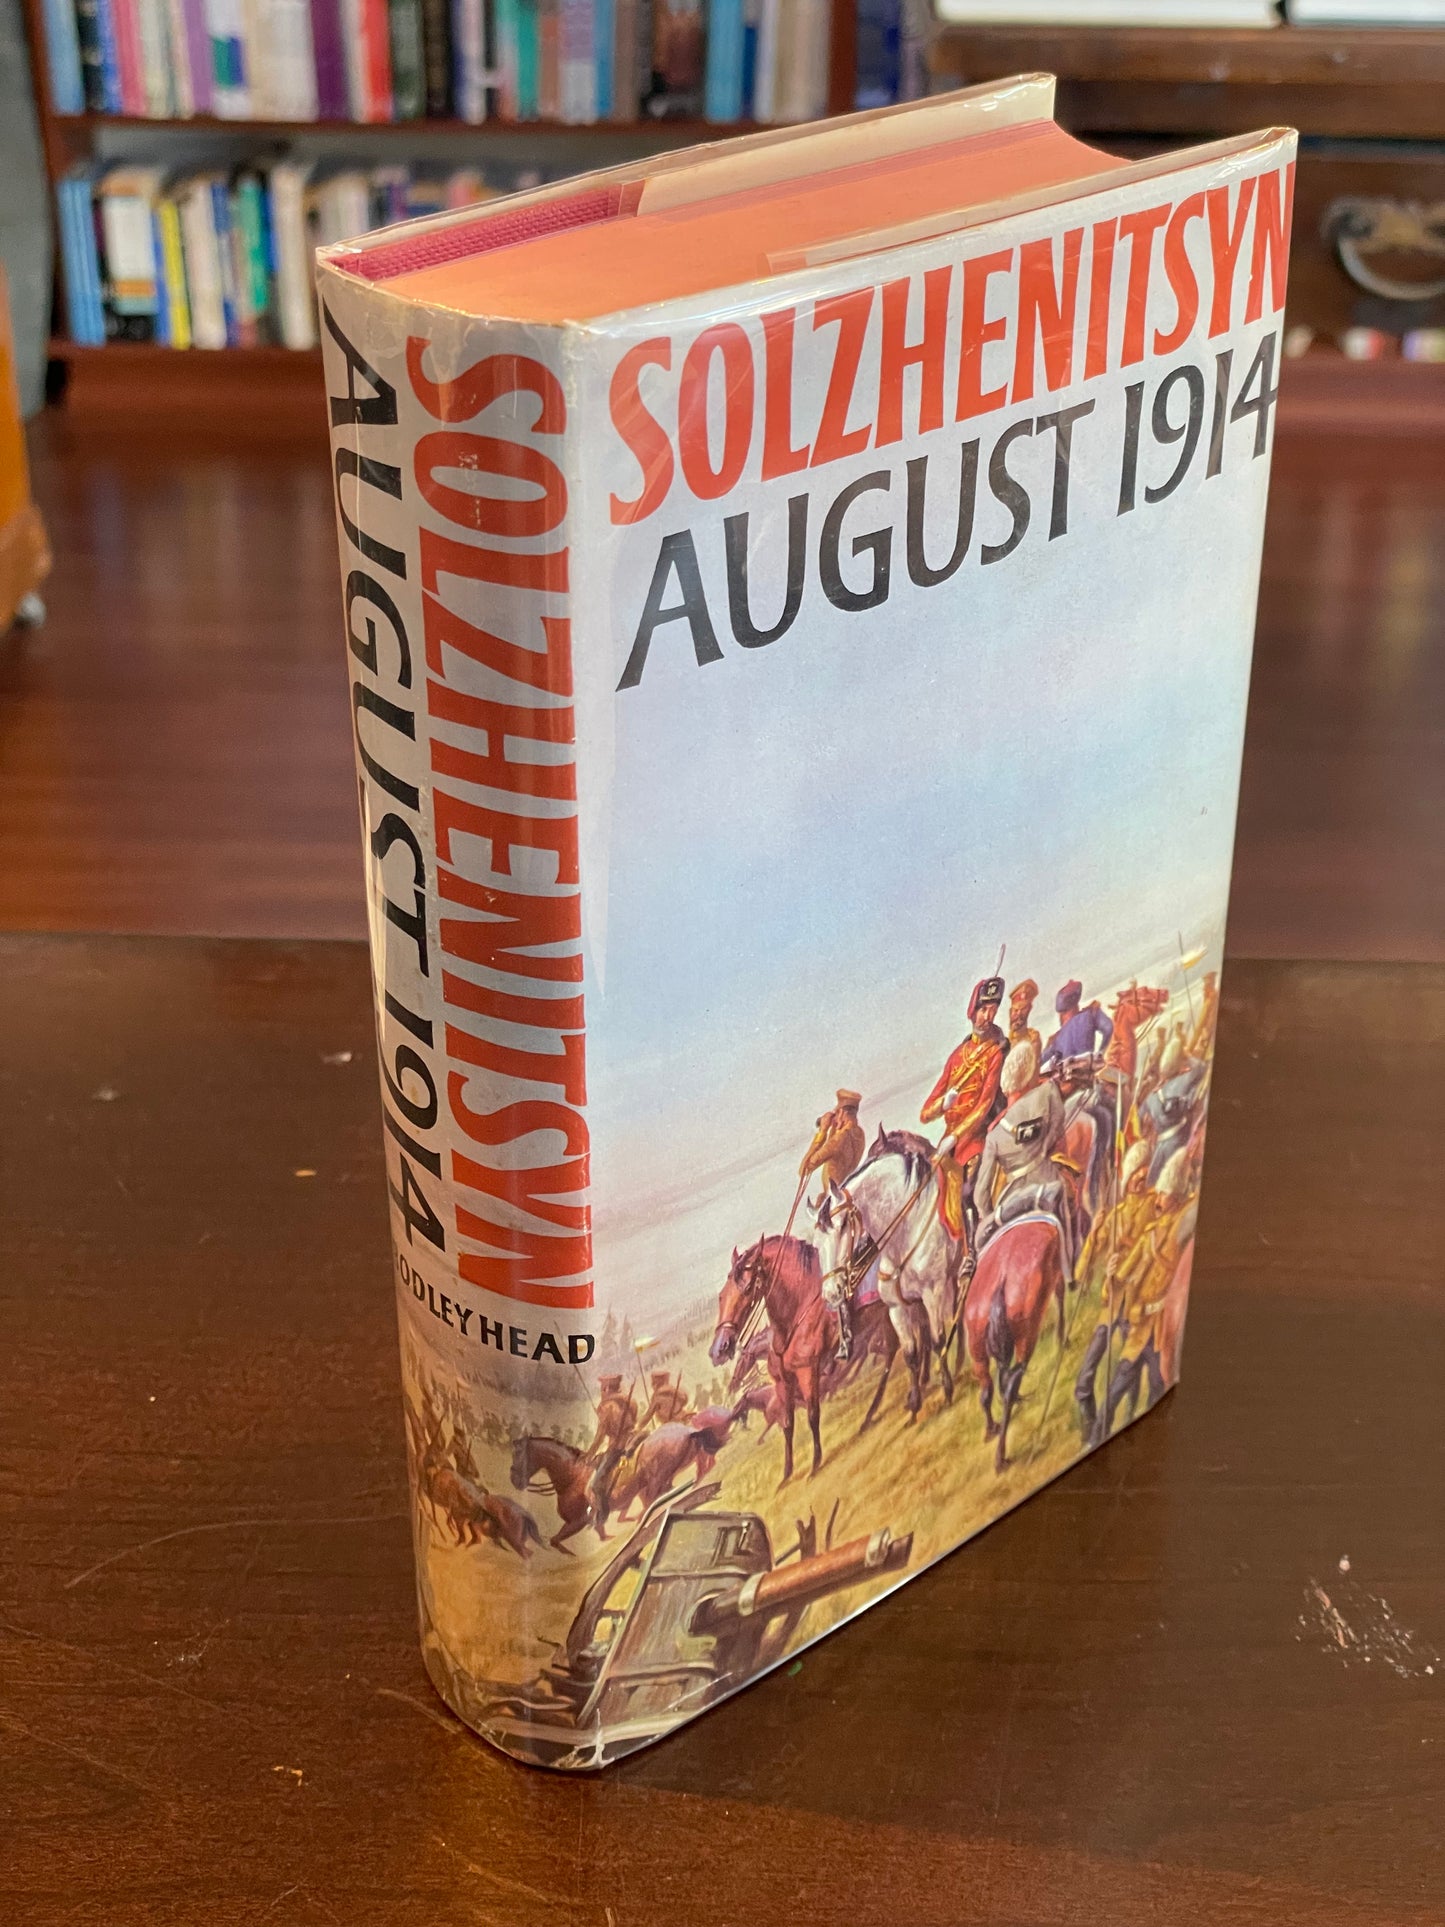 August 1914 by Alexander Solzhenitsyn